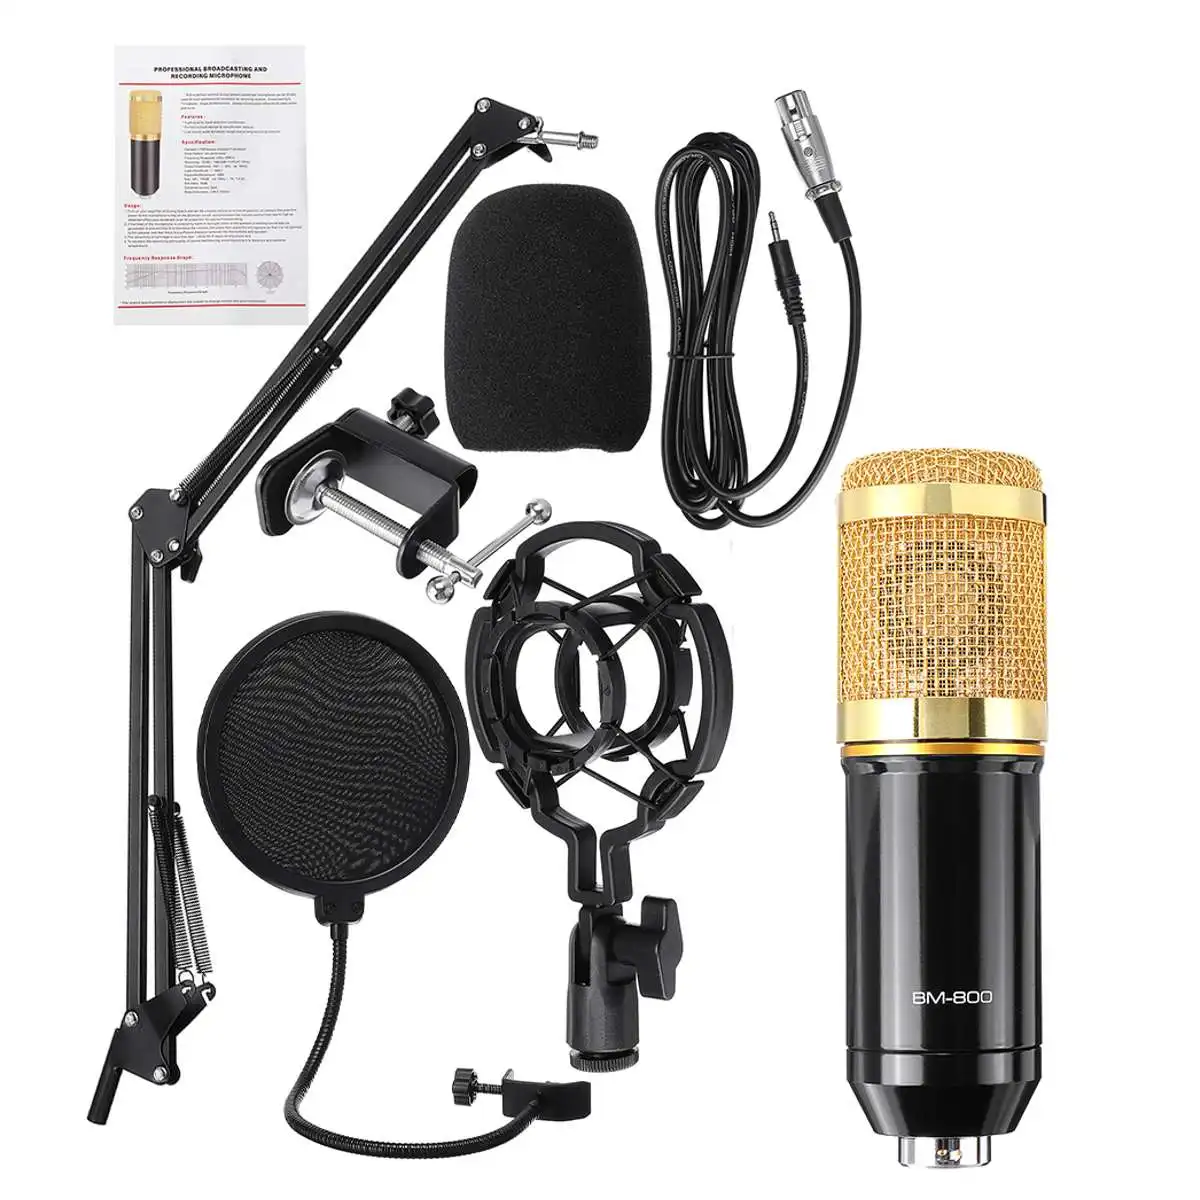 

BM800 SUMI Condenser Microphon Computer Karaoke Microphone Kit bm-800 Phantom Power Stand, Black